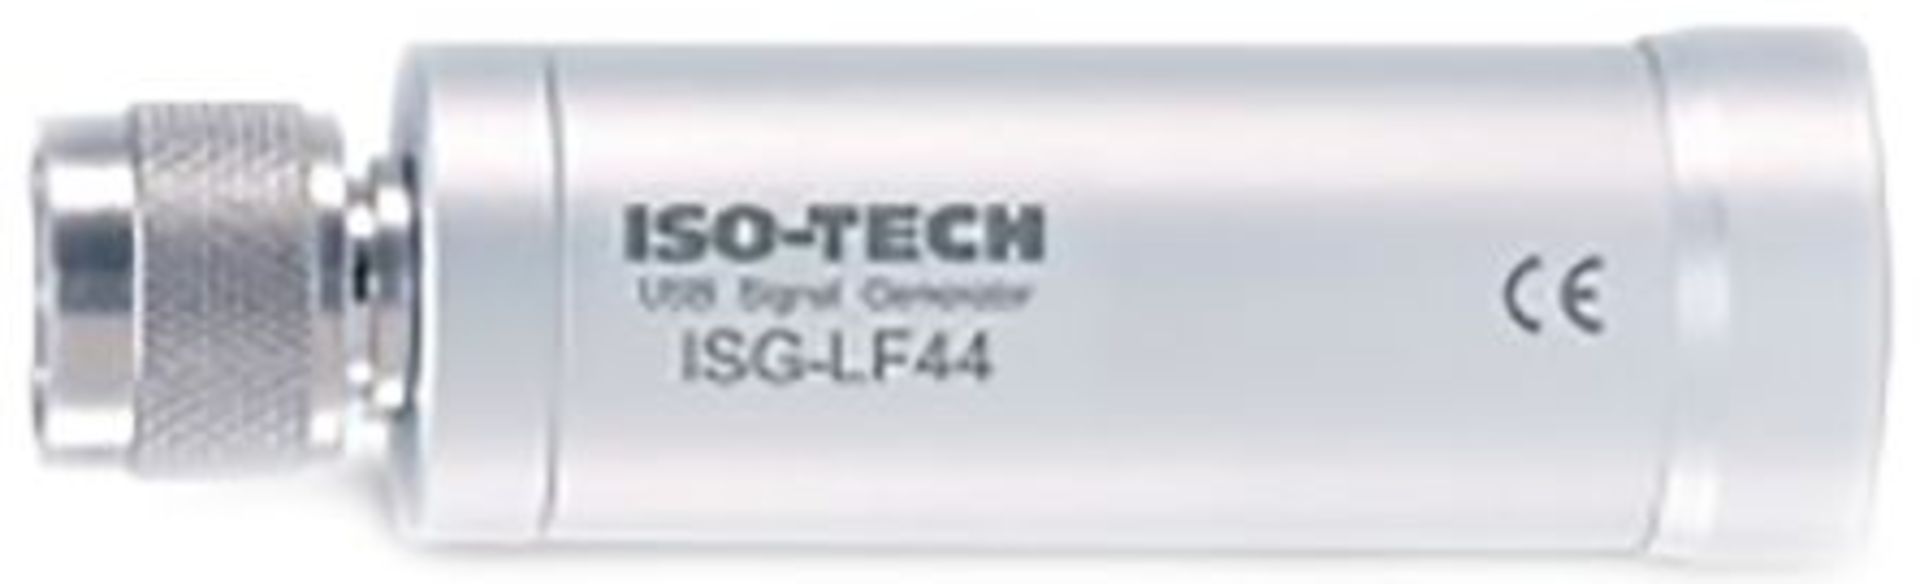 ISO-TECH ISG-LF44 RF Function Generator 4.4GHz USB 2.0 35MHz ∼ 4400MHz